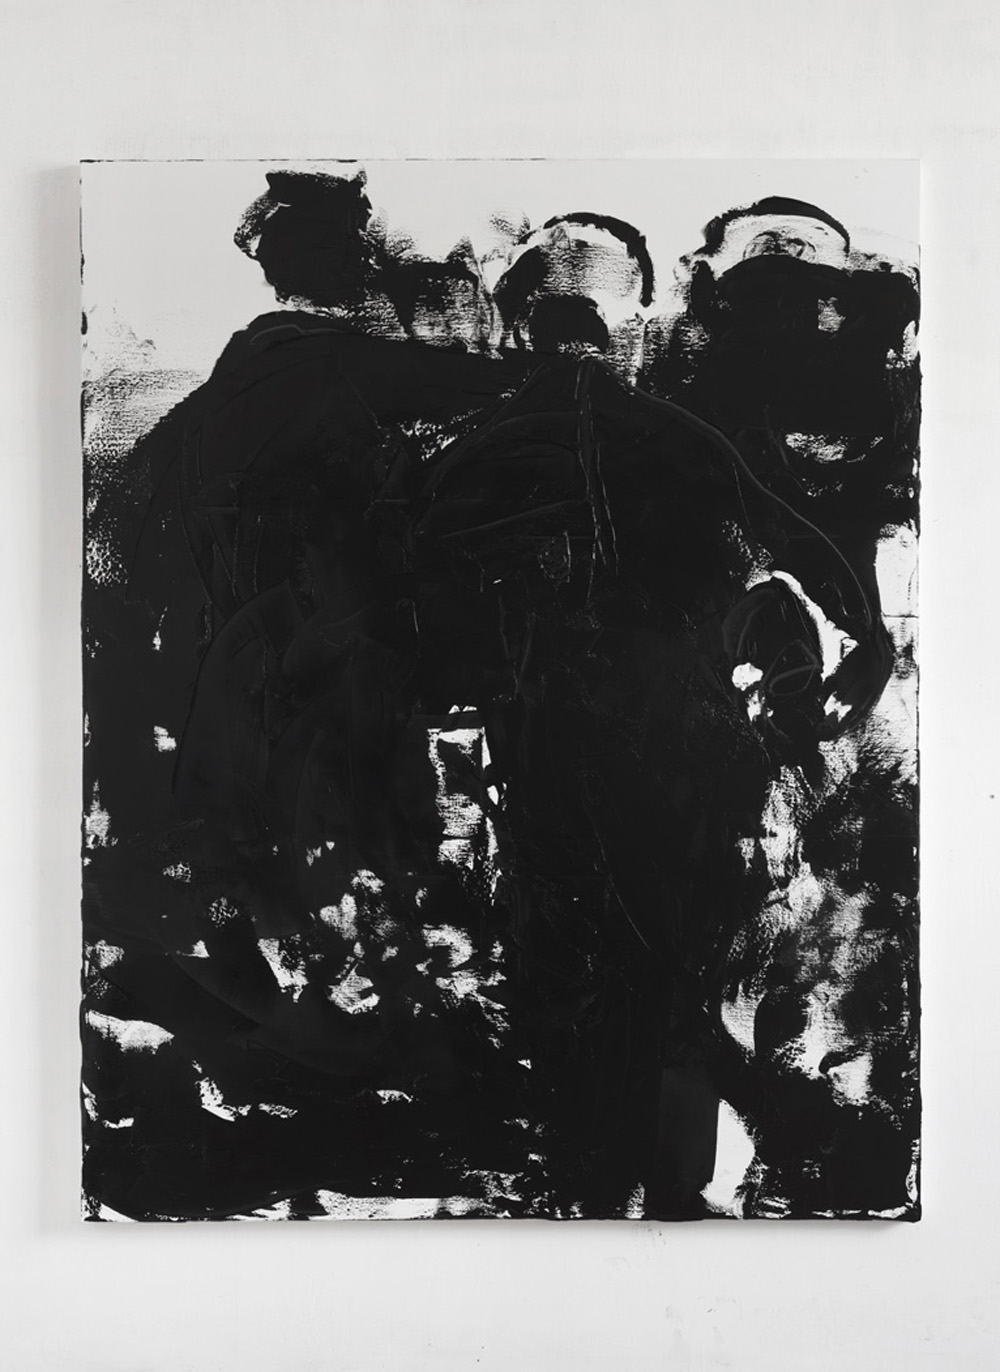 Gianni Dessì, Conversation piece XII, 2017, olio su tela, cm 230x180